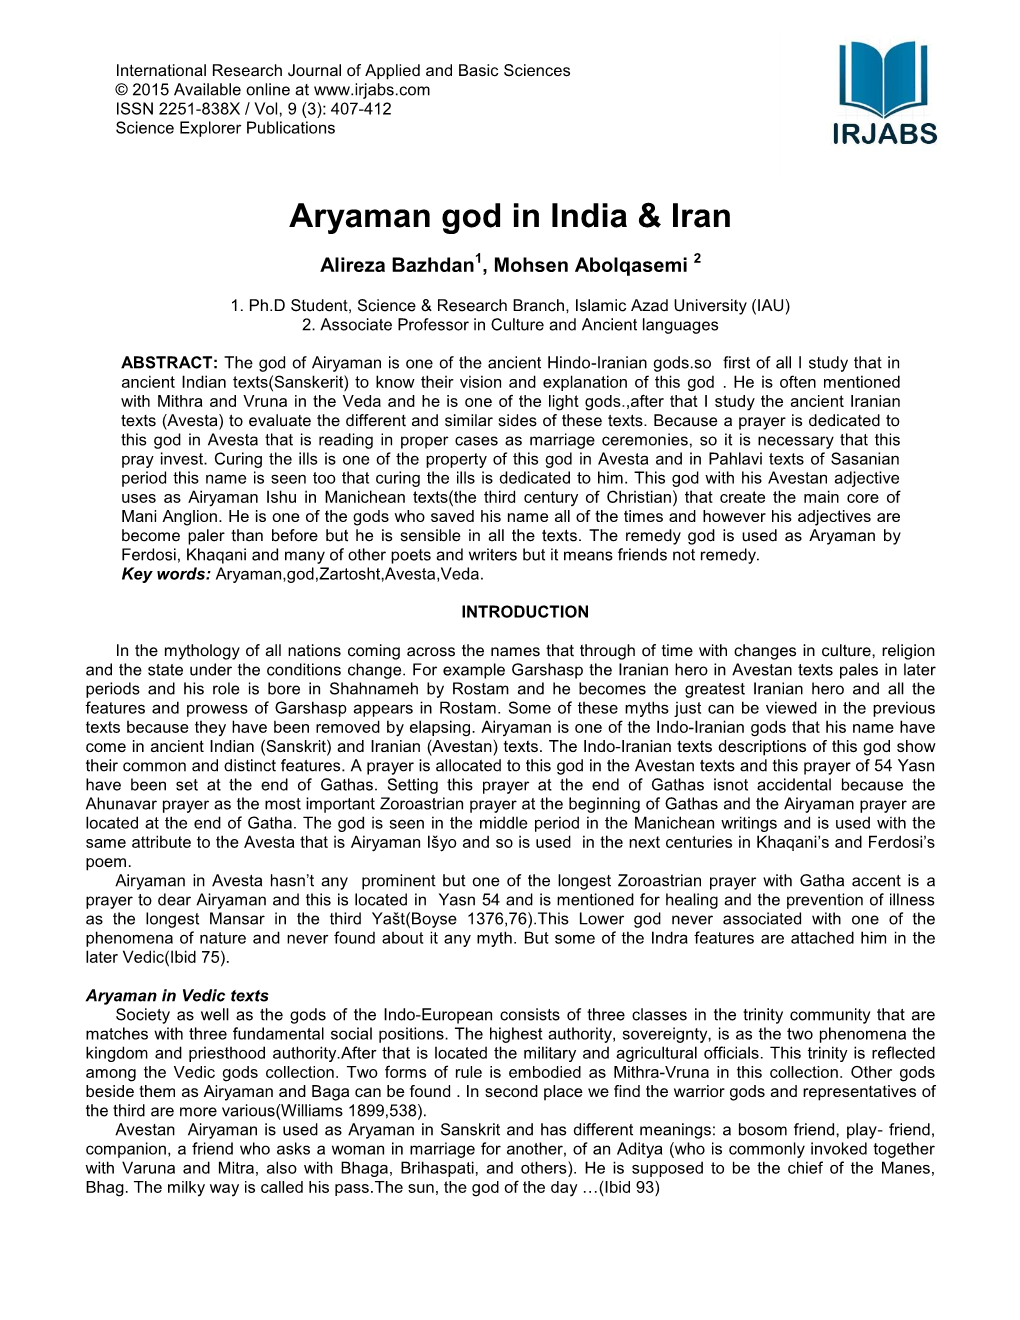 Aryaman God in India & Iran